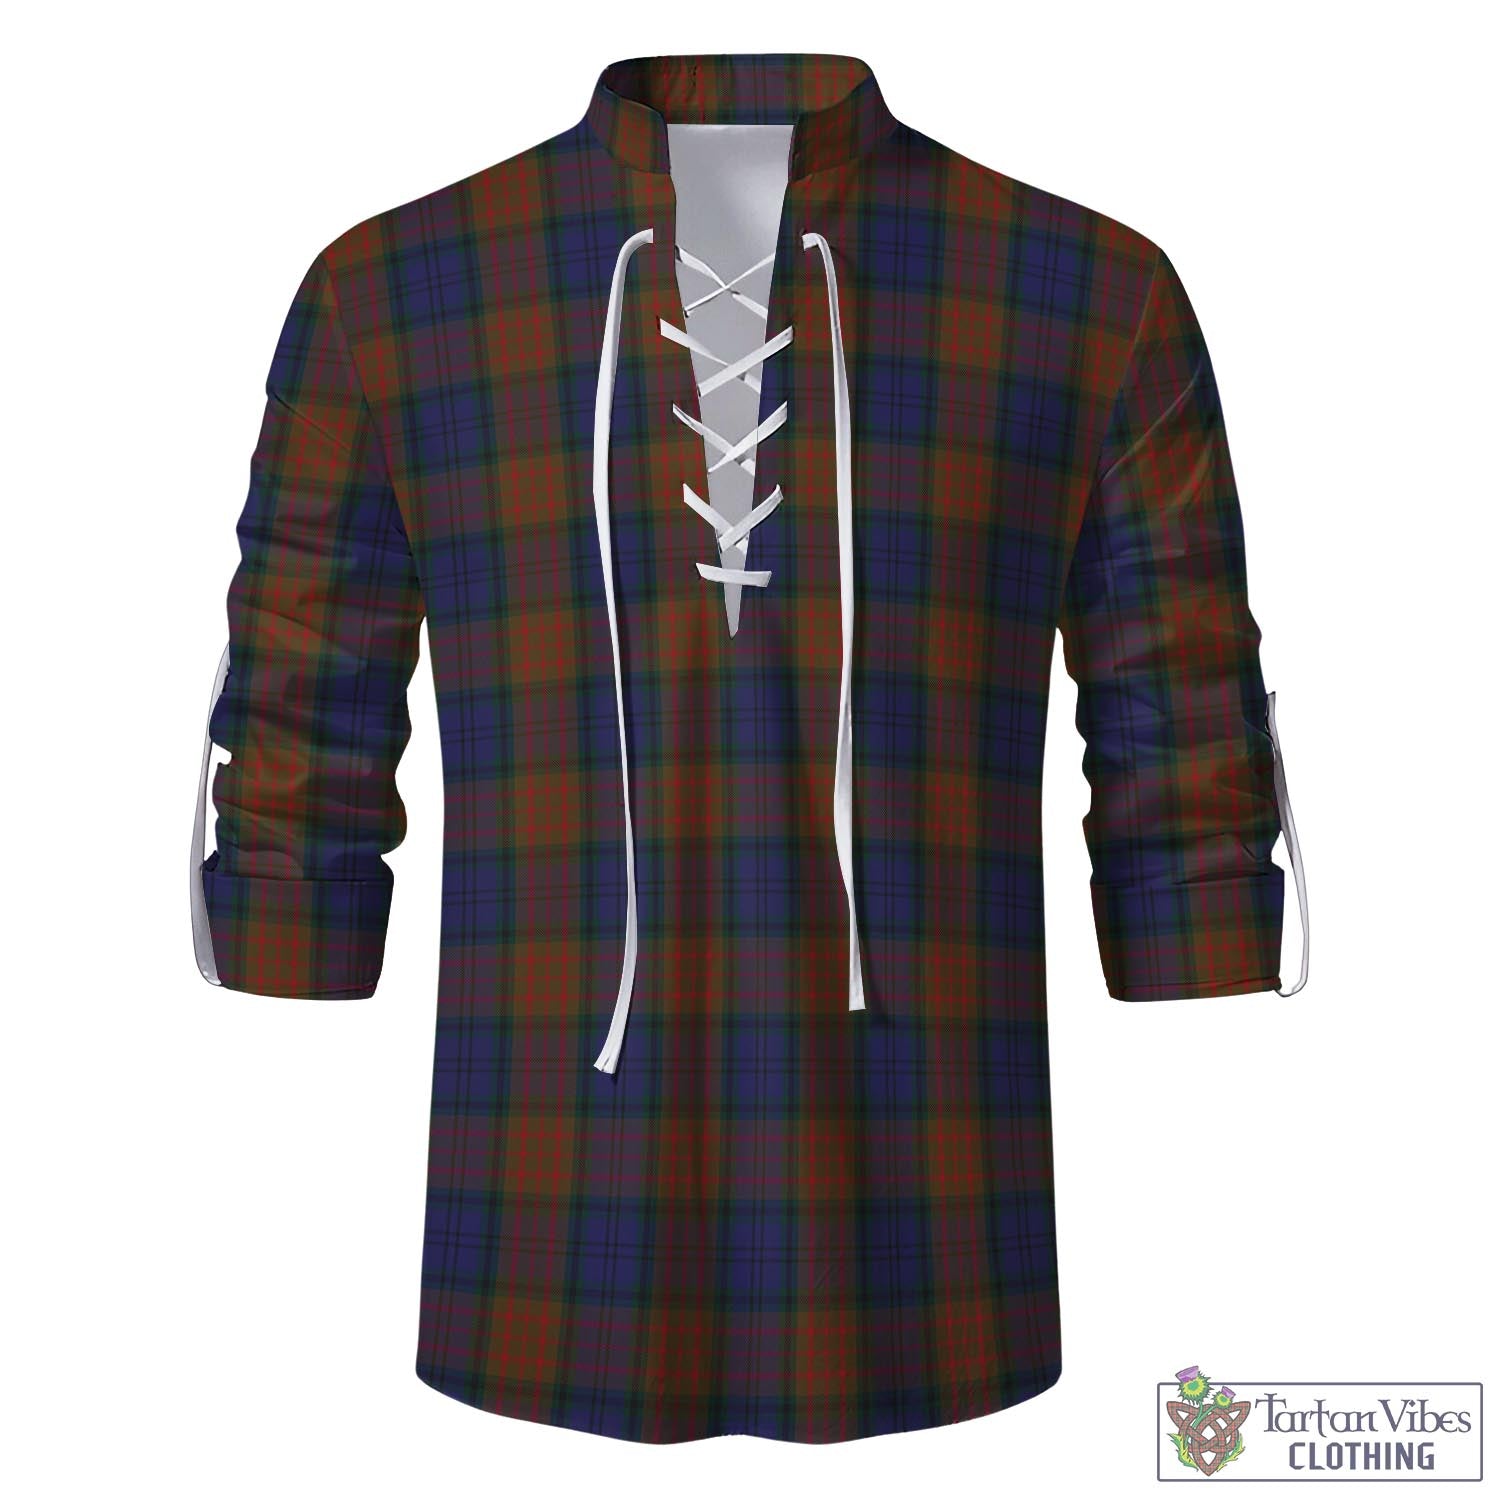 Tartan Vibes Clothing Longford County Ireland Tartan Men's Scottish Traditional Jacobite Ghillie Kilt Shirt